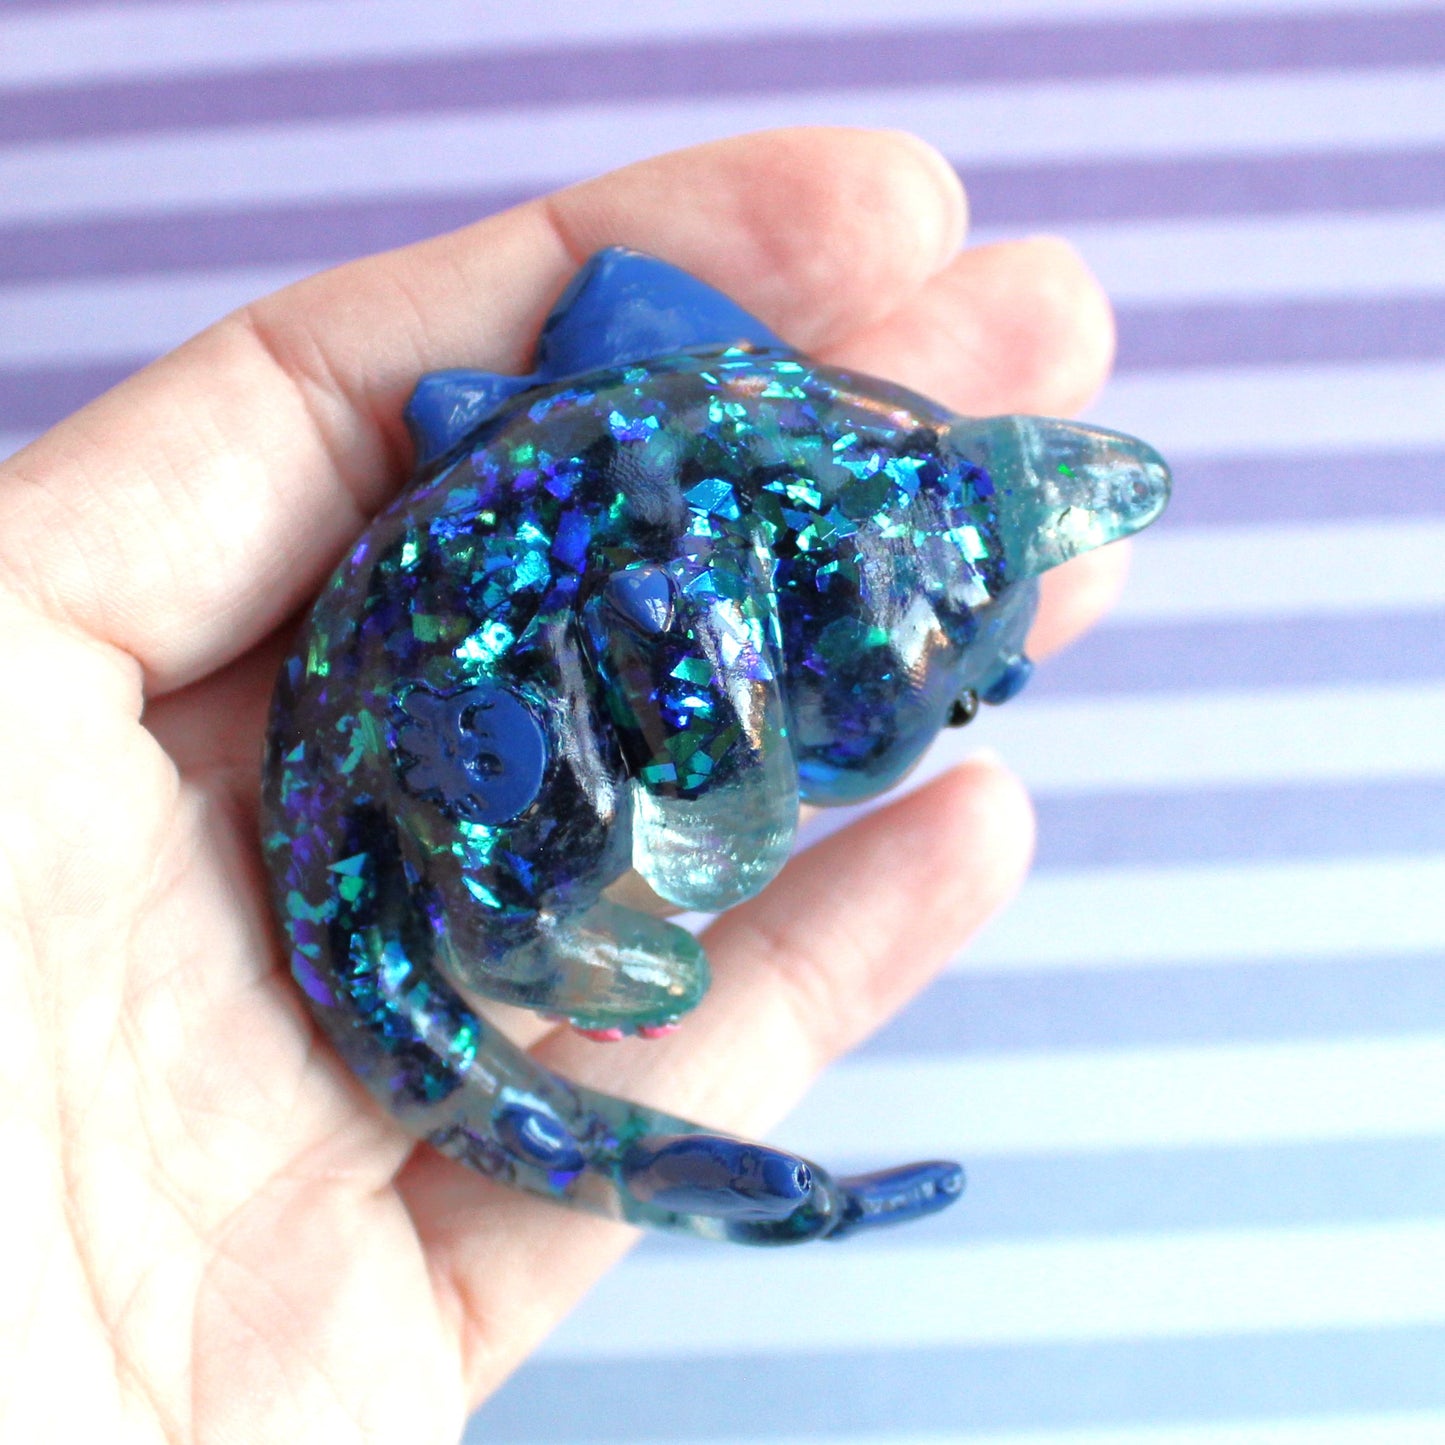 Teal Glitter Shards Cat Shark Figure. Handmade Resin Art Toy Mini Fig. Desk Decoration Collectable. Chibi